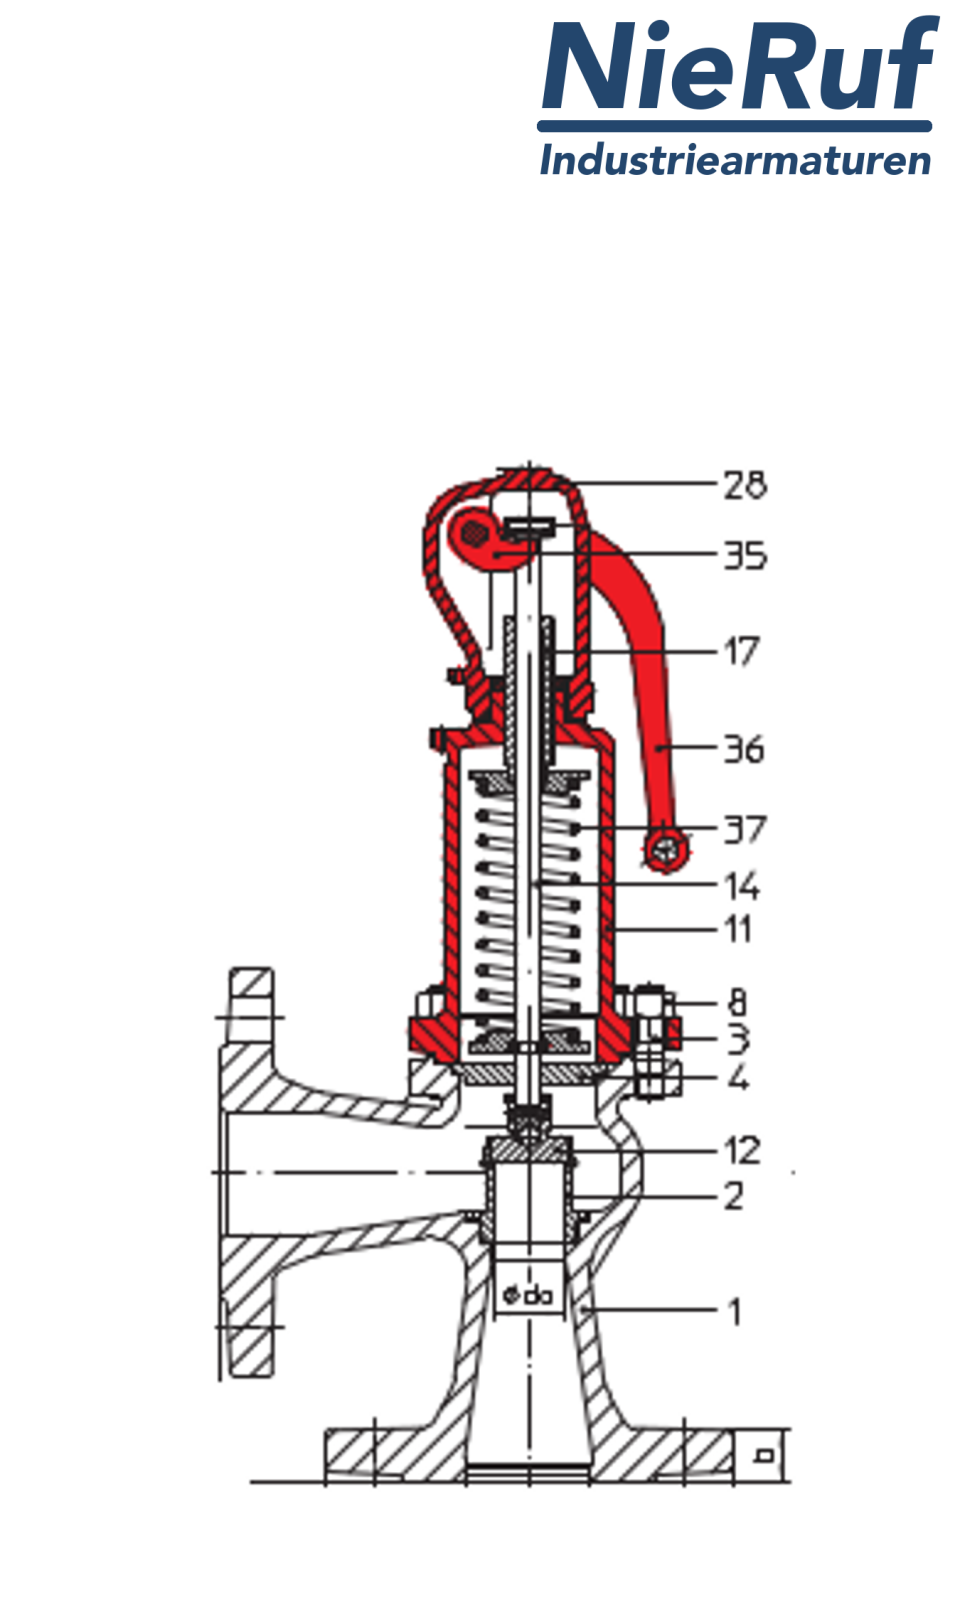 flange-safety valve DN25/DN25 SF02, cast steel 1.0619+N FPM, with lever